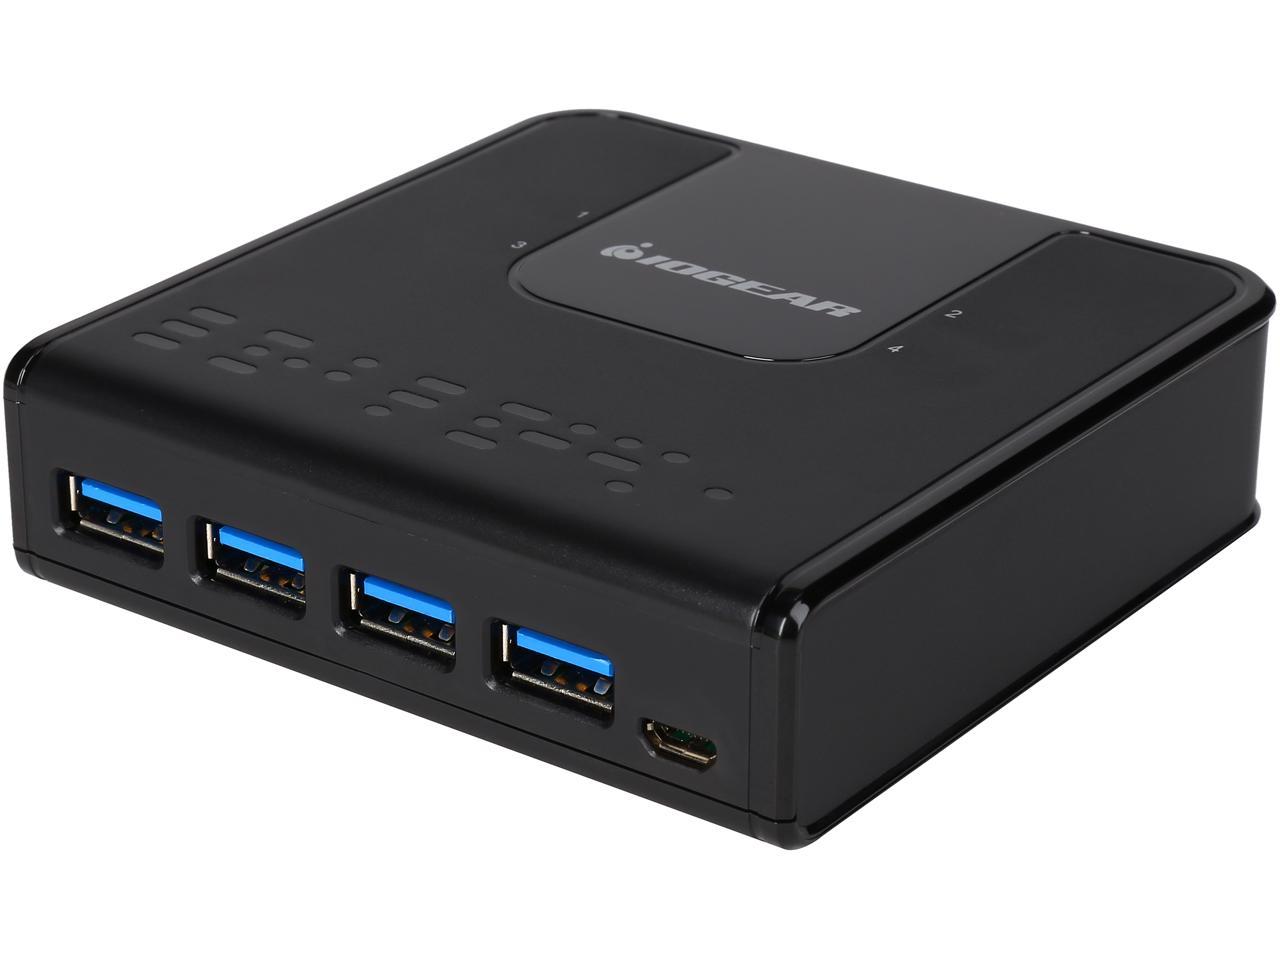 axGear USB 3.0 Sharing Switch/Selector 2 Computer Sharing 4 USB 3.0 Device KVM